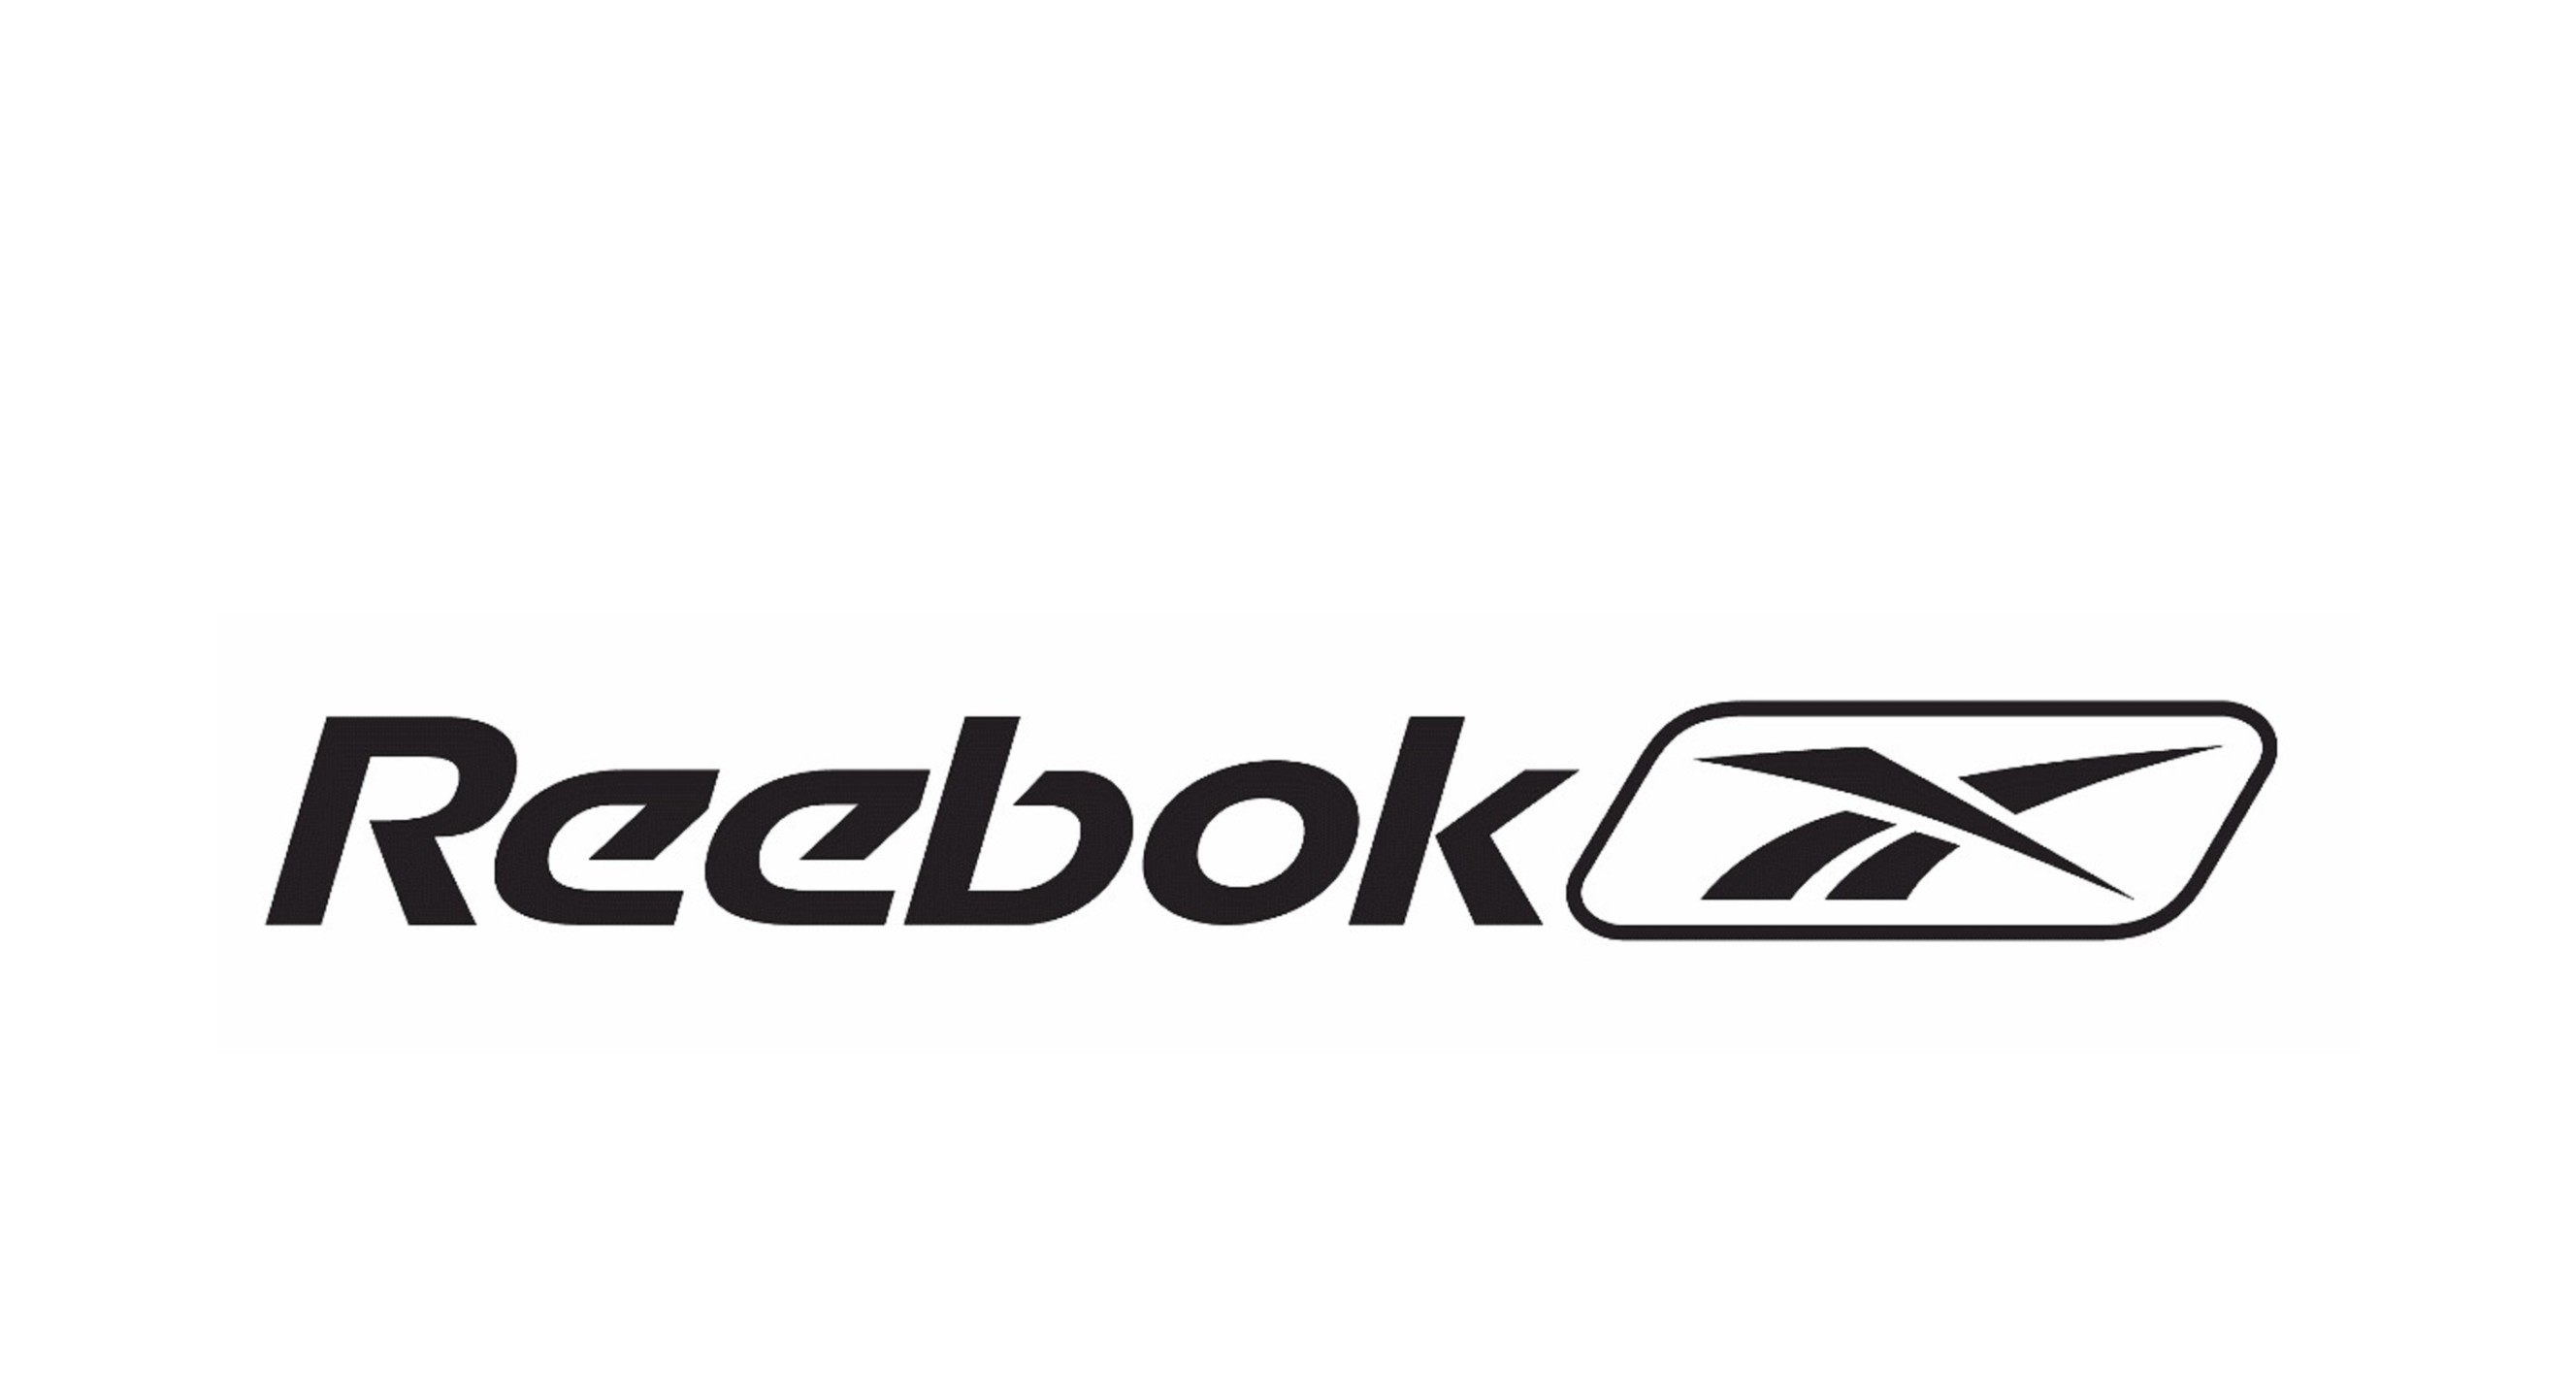 Reebok Logo Sport Wallpaper Hd Brands 4k Wallpapers Images Photos And Background Wallpapers Den